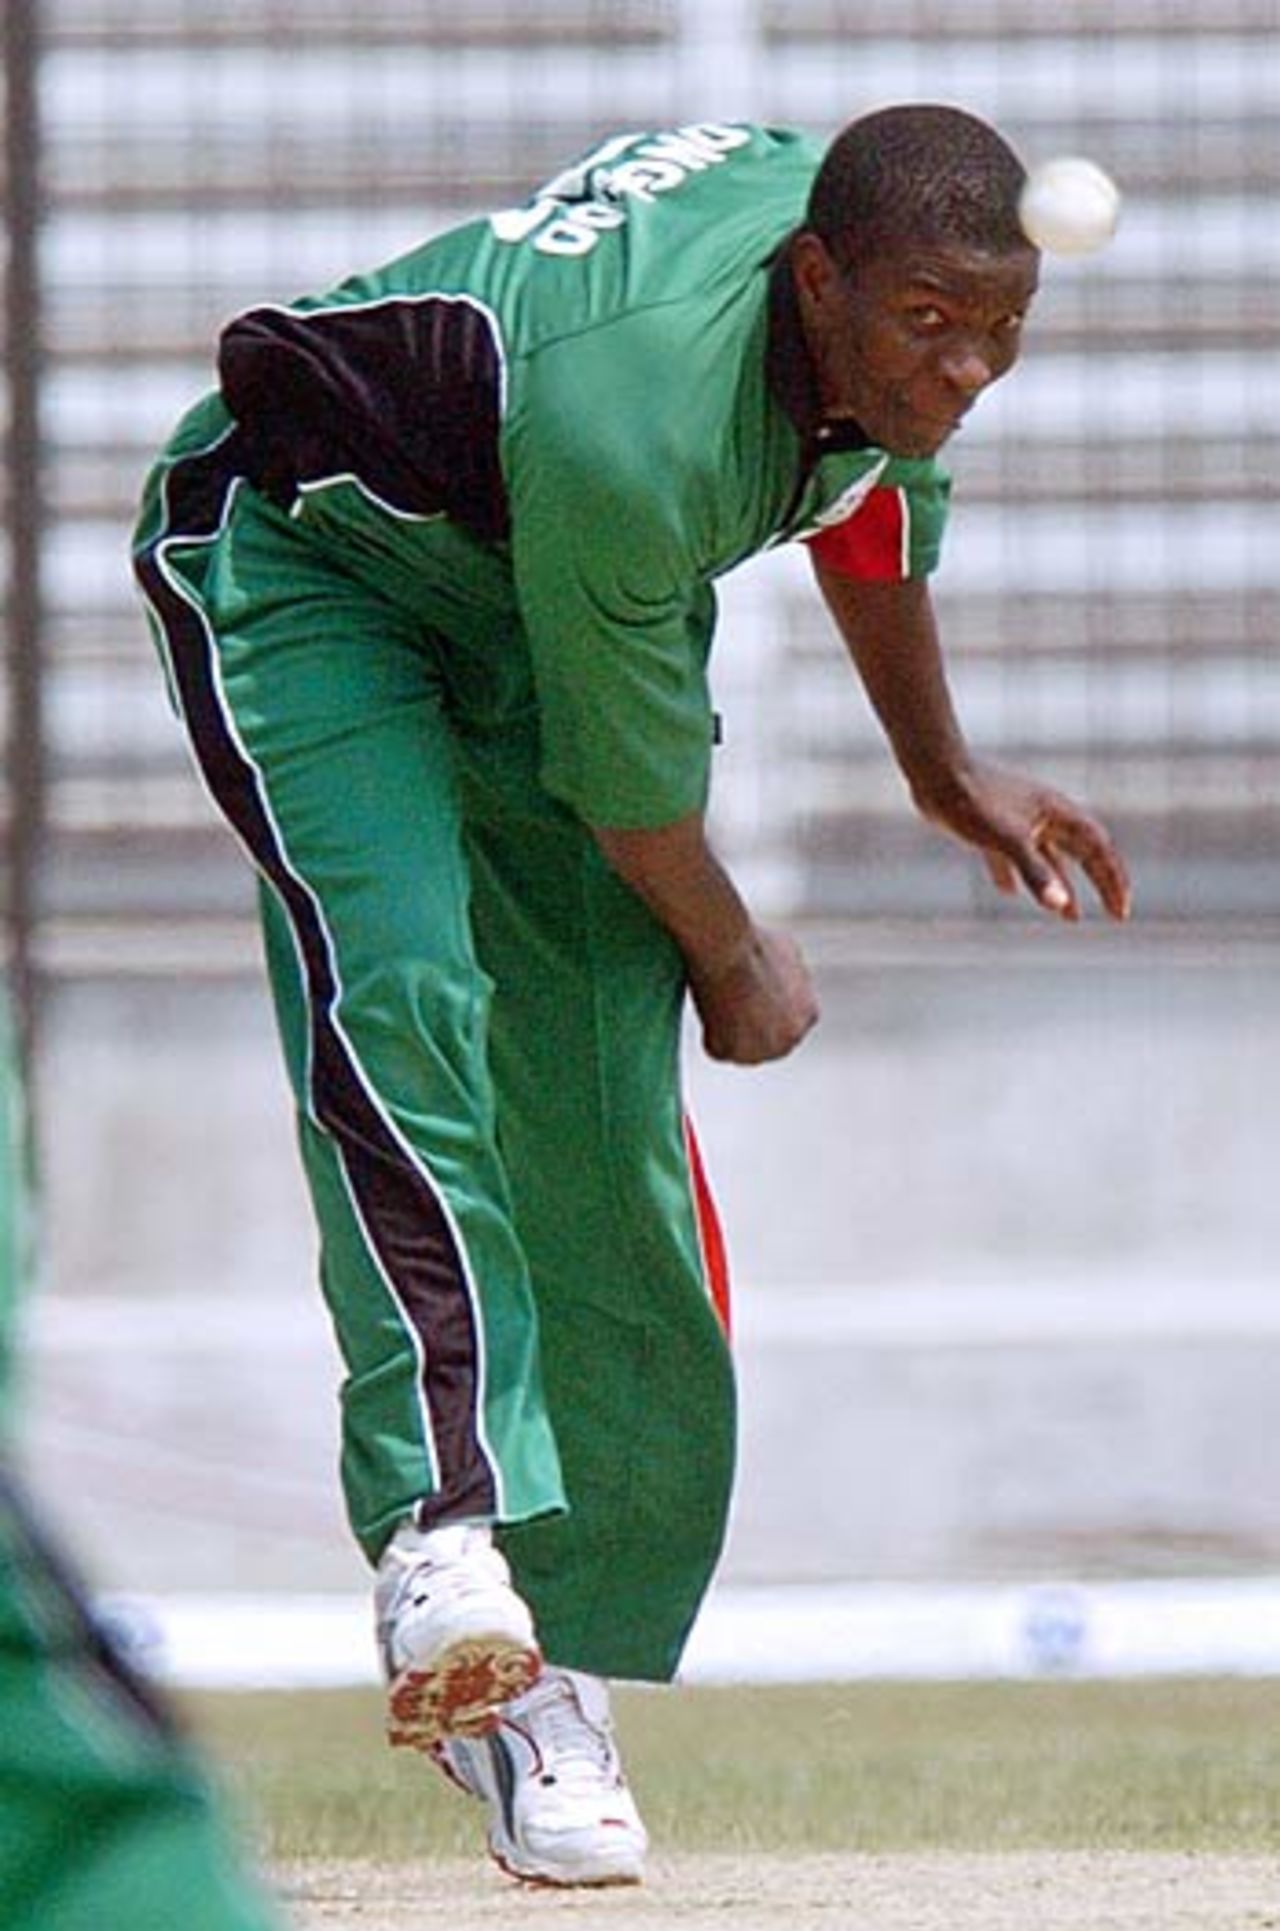 Peter Ongondo sends down another delivery, Bangladesh v Kenya, 3rd ODI, Fatullah, March 23 2006